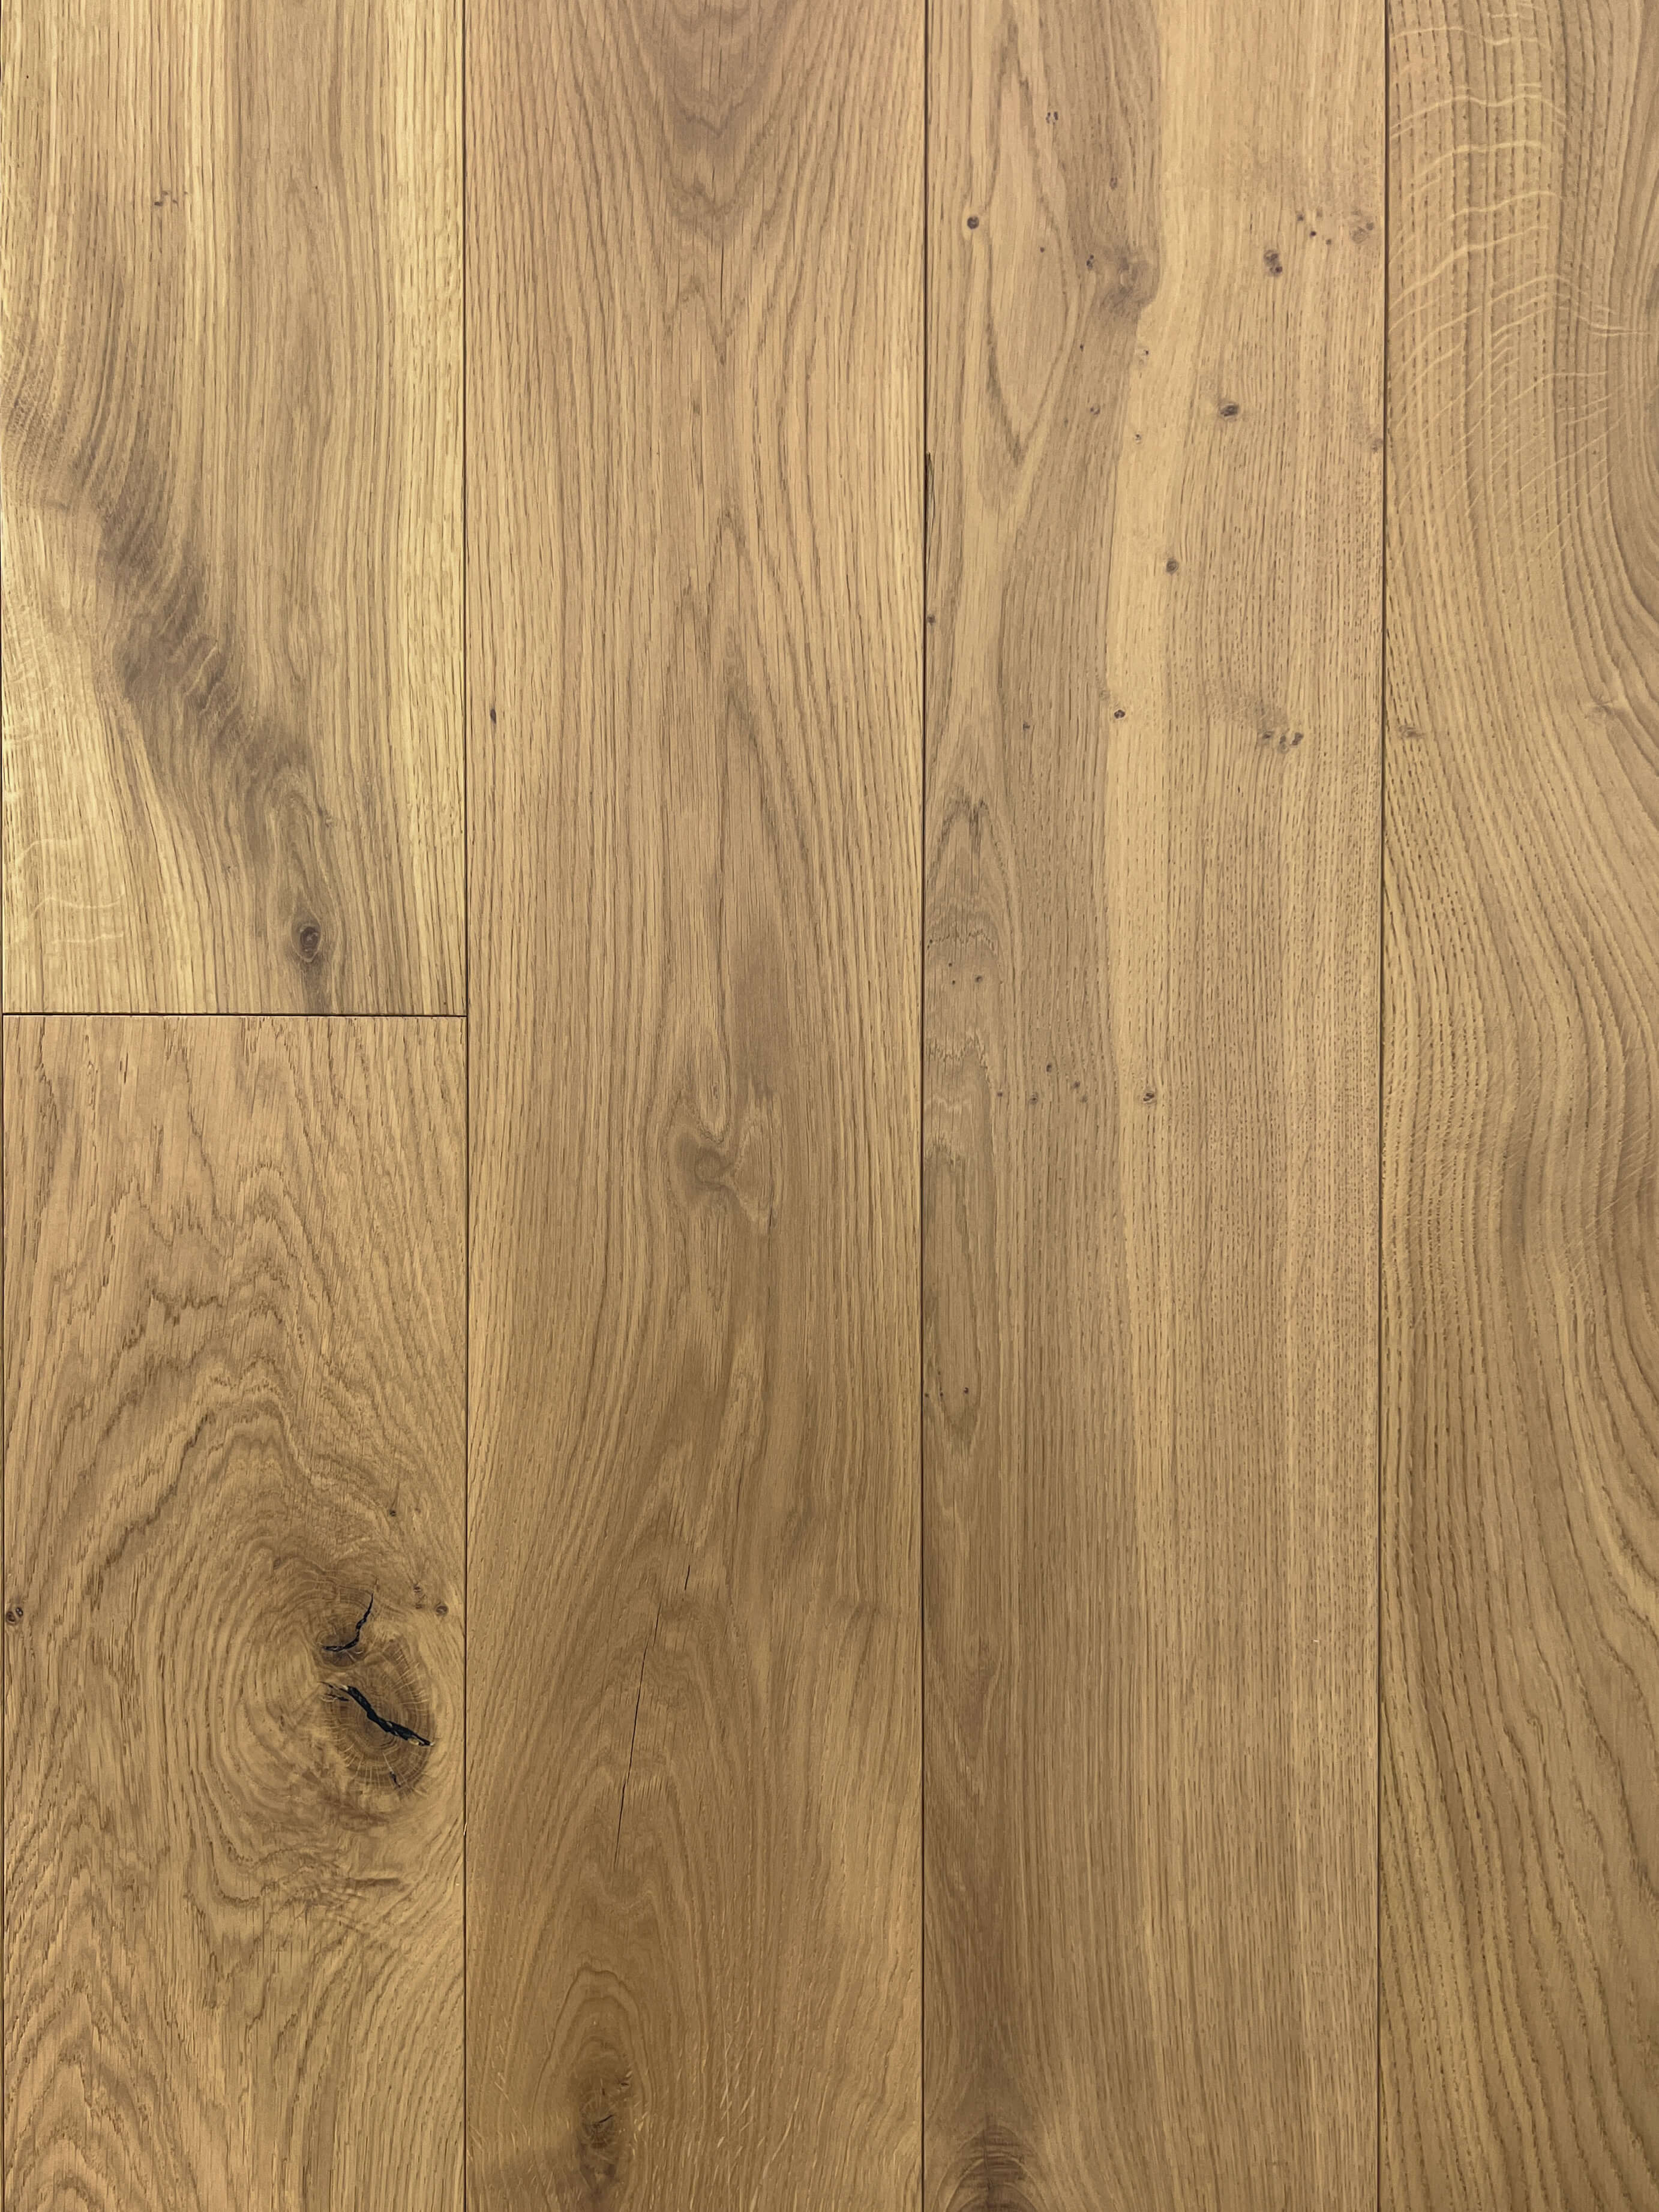 Floorest - 7 1/2 x 3/4 - Oak Sunset Oak (3MM Top) - Engineered Hardwood - 27.20 SF/b